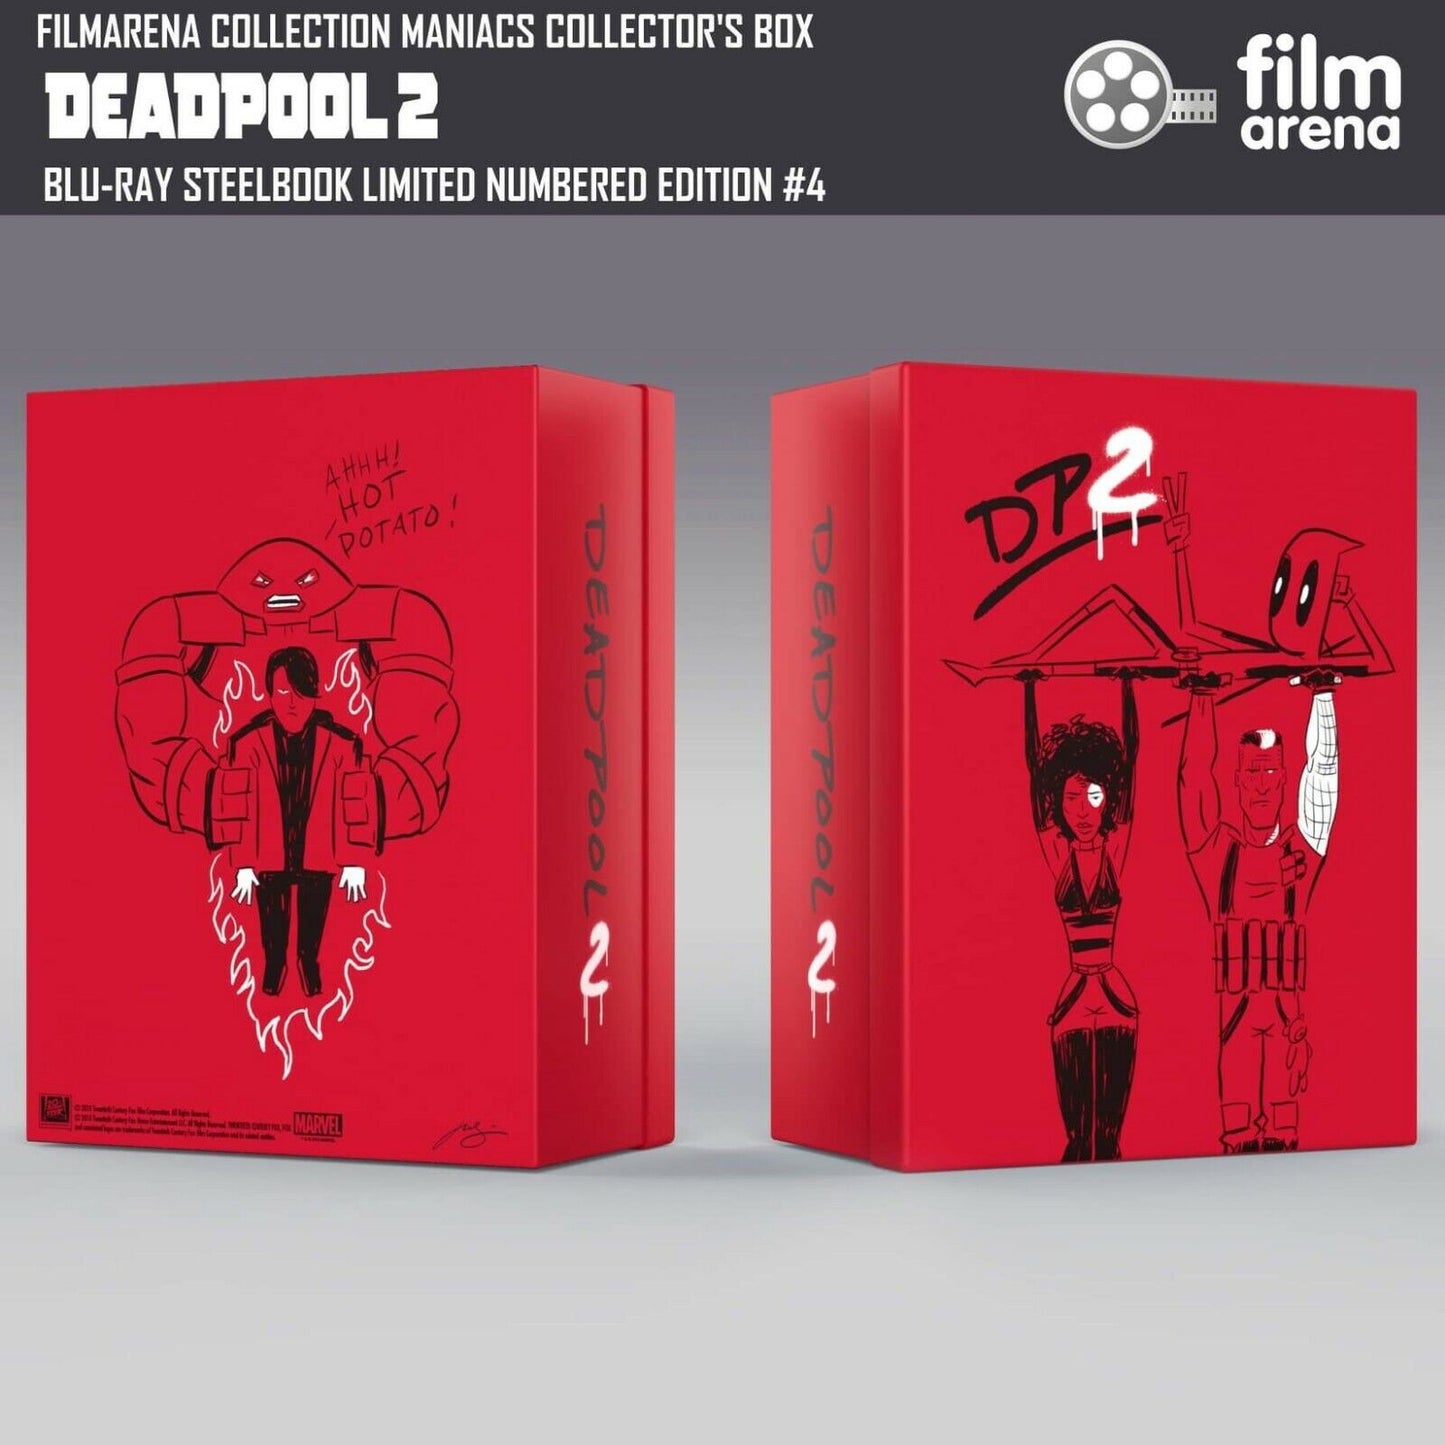 Deadpool 2 4K Blu-ray Steelbook Filmarena Collection #107 E4 Maniacs Collectors Box Set Edition